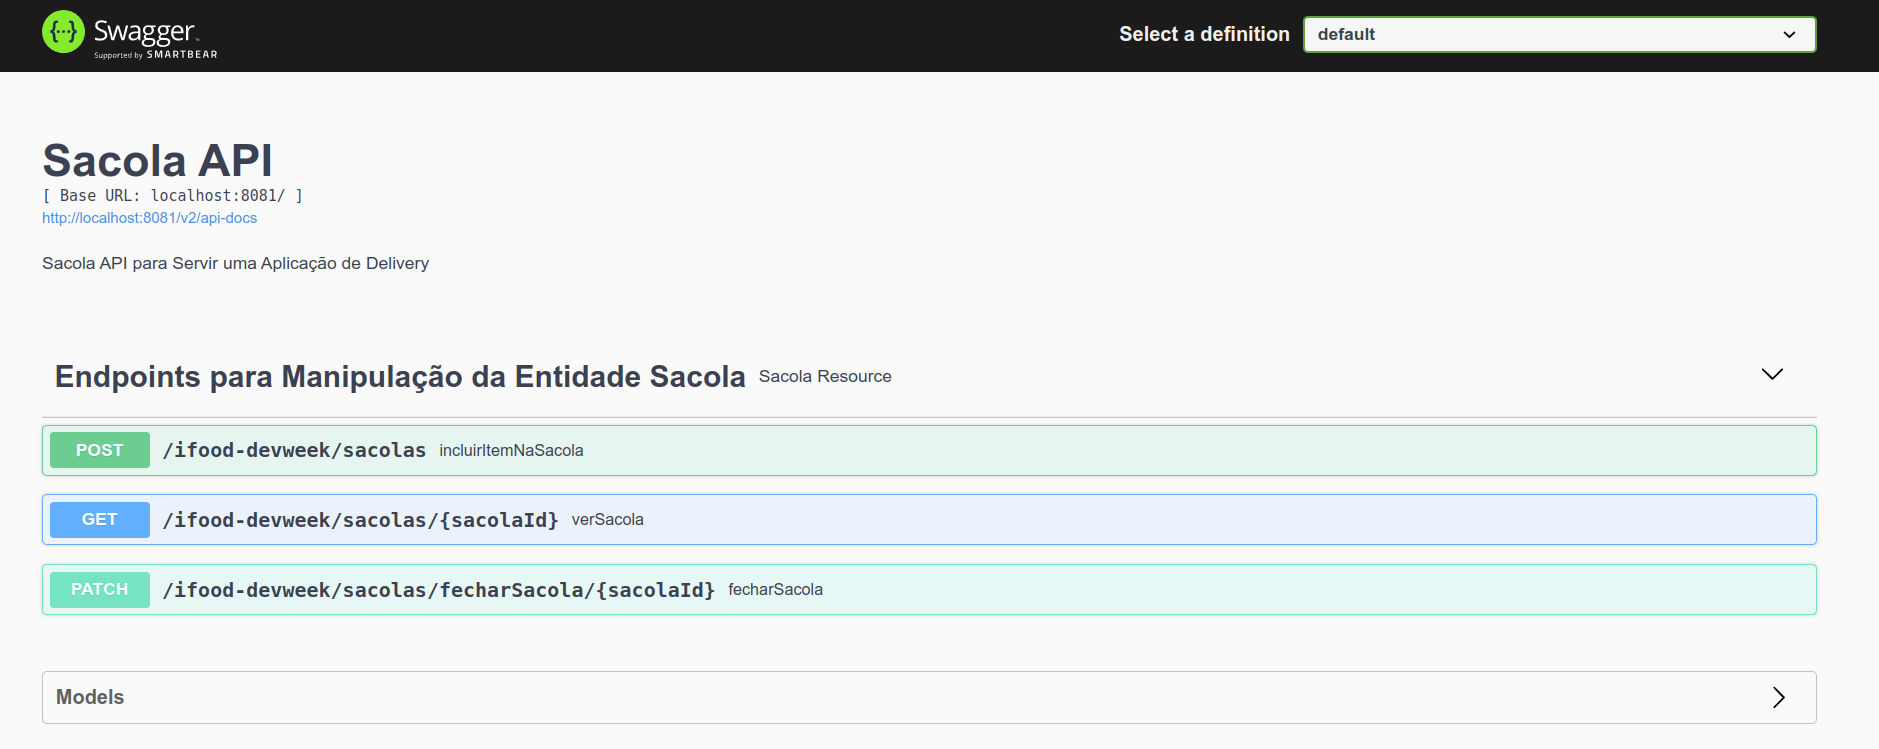 Sacola API Swagger UI